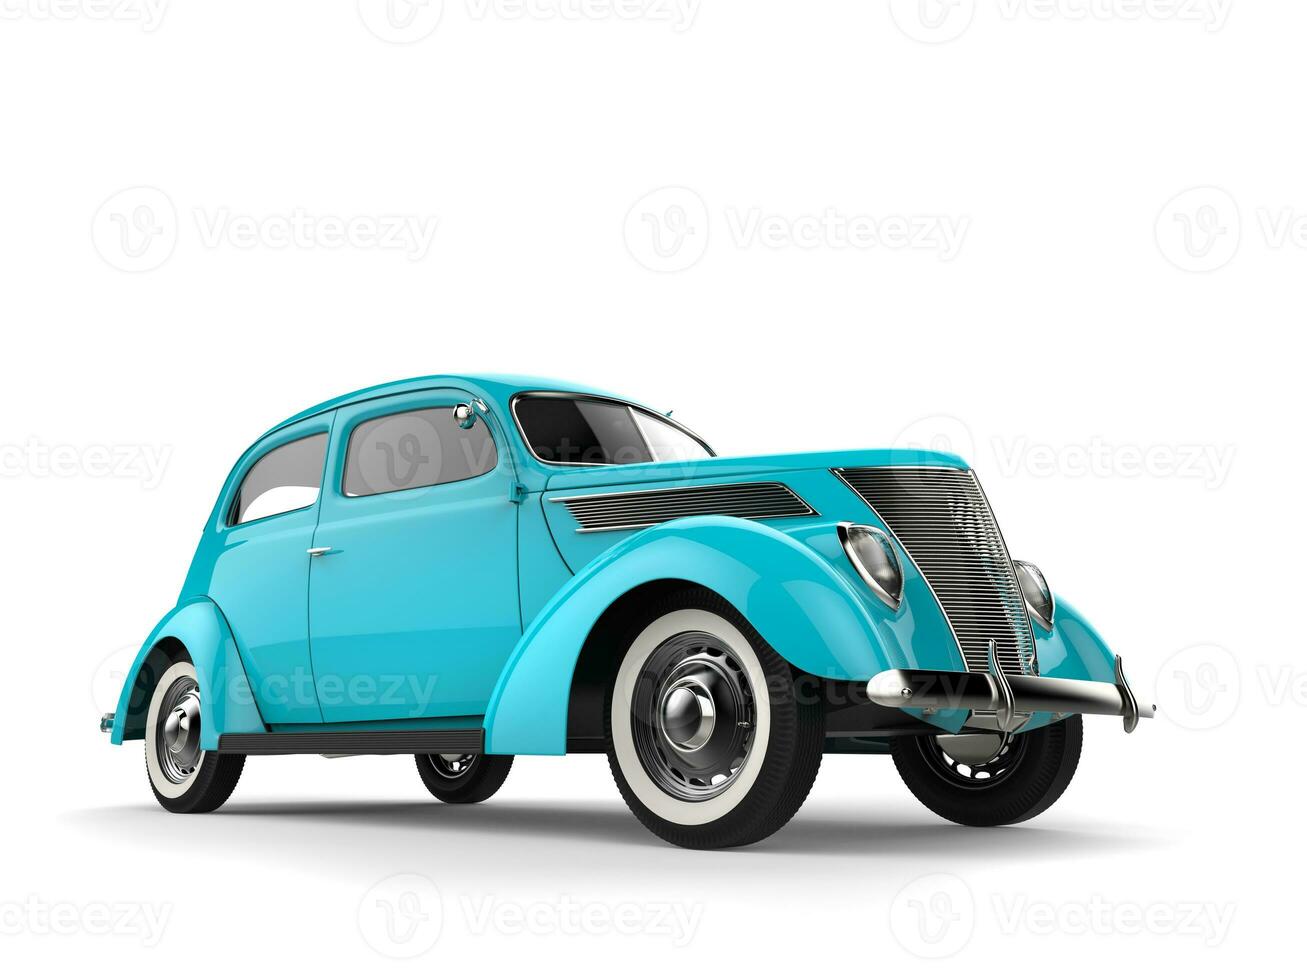 luminosa pastello blu vecchio Vintage ▾ auto - Basso angolo tiro foto